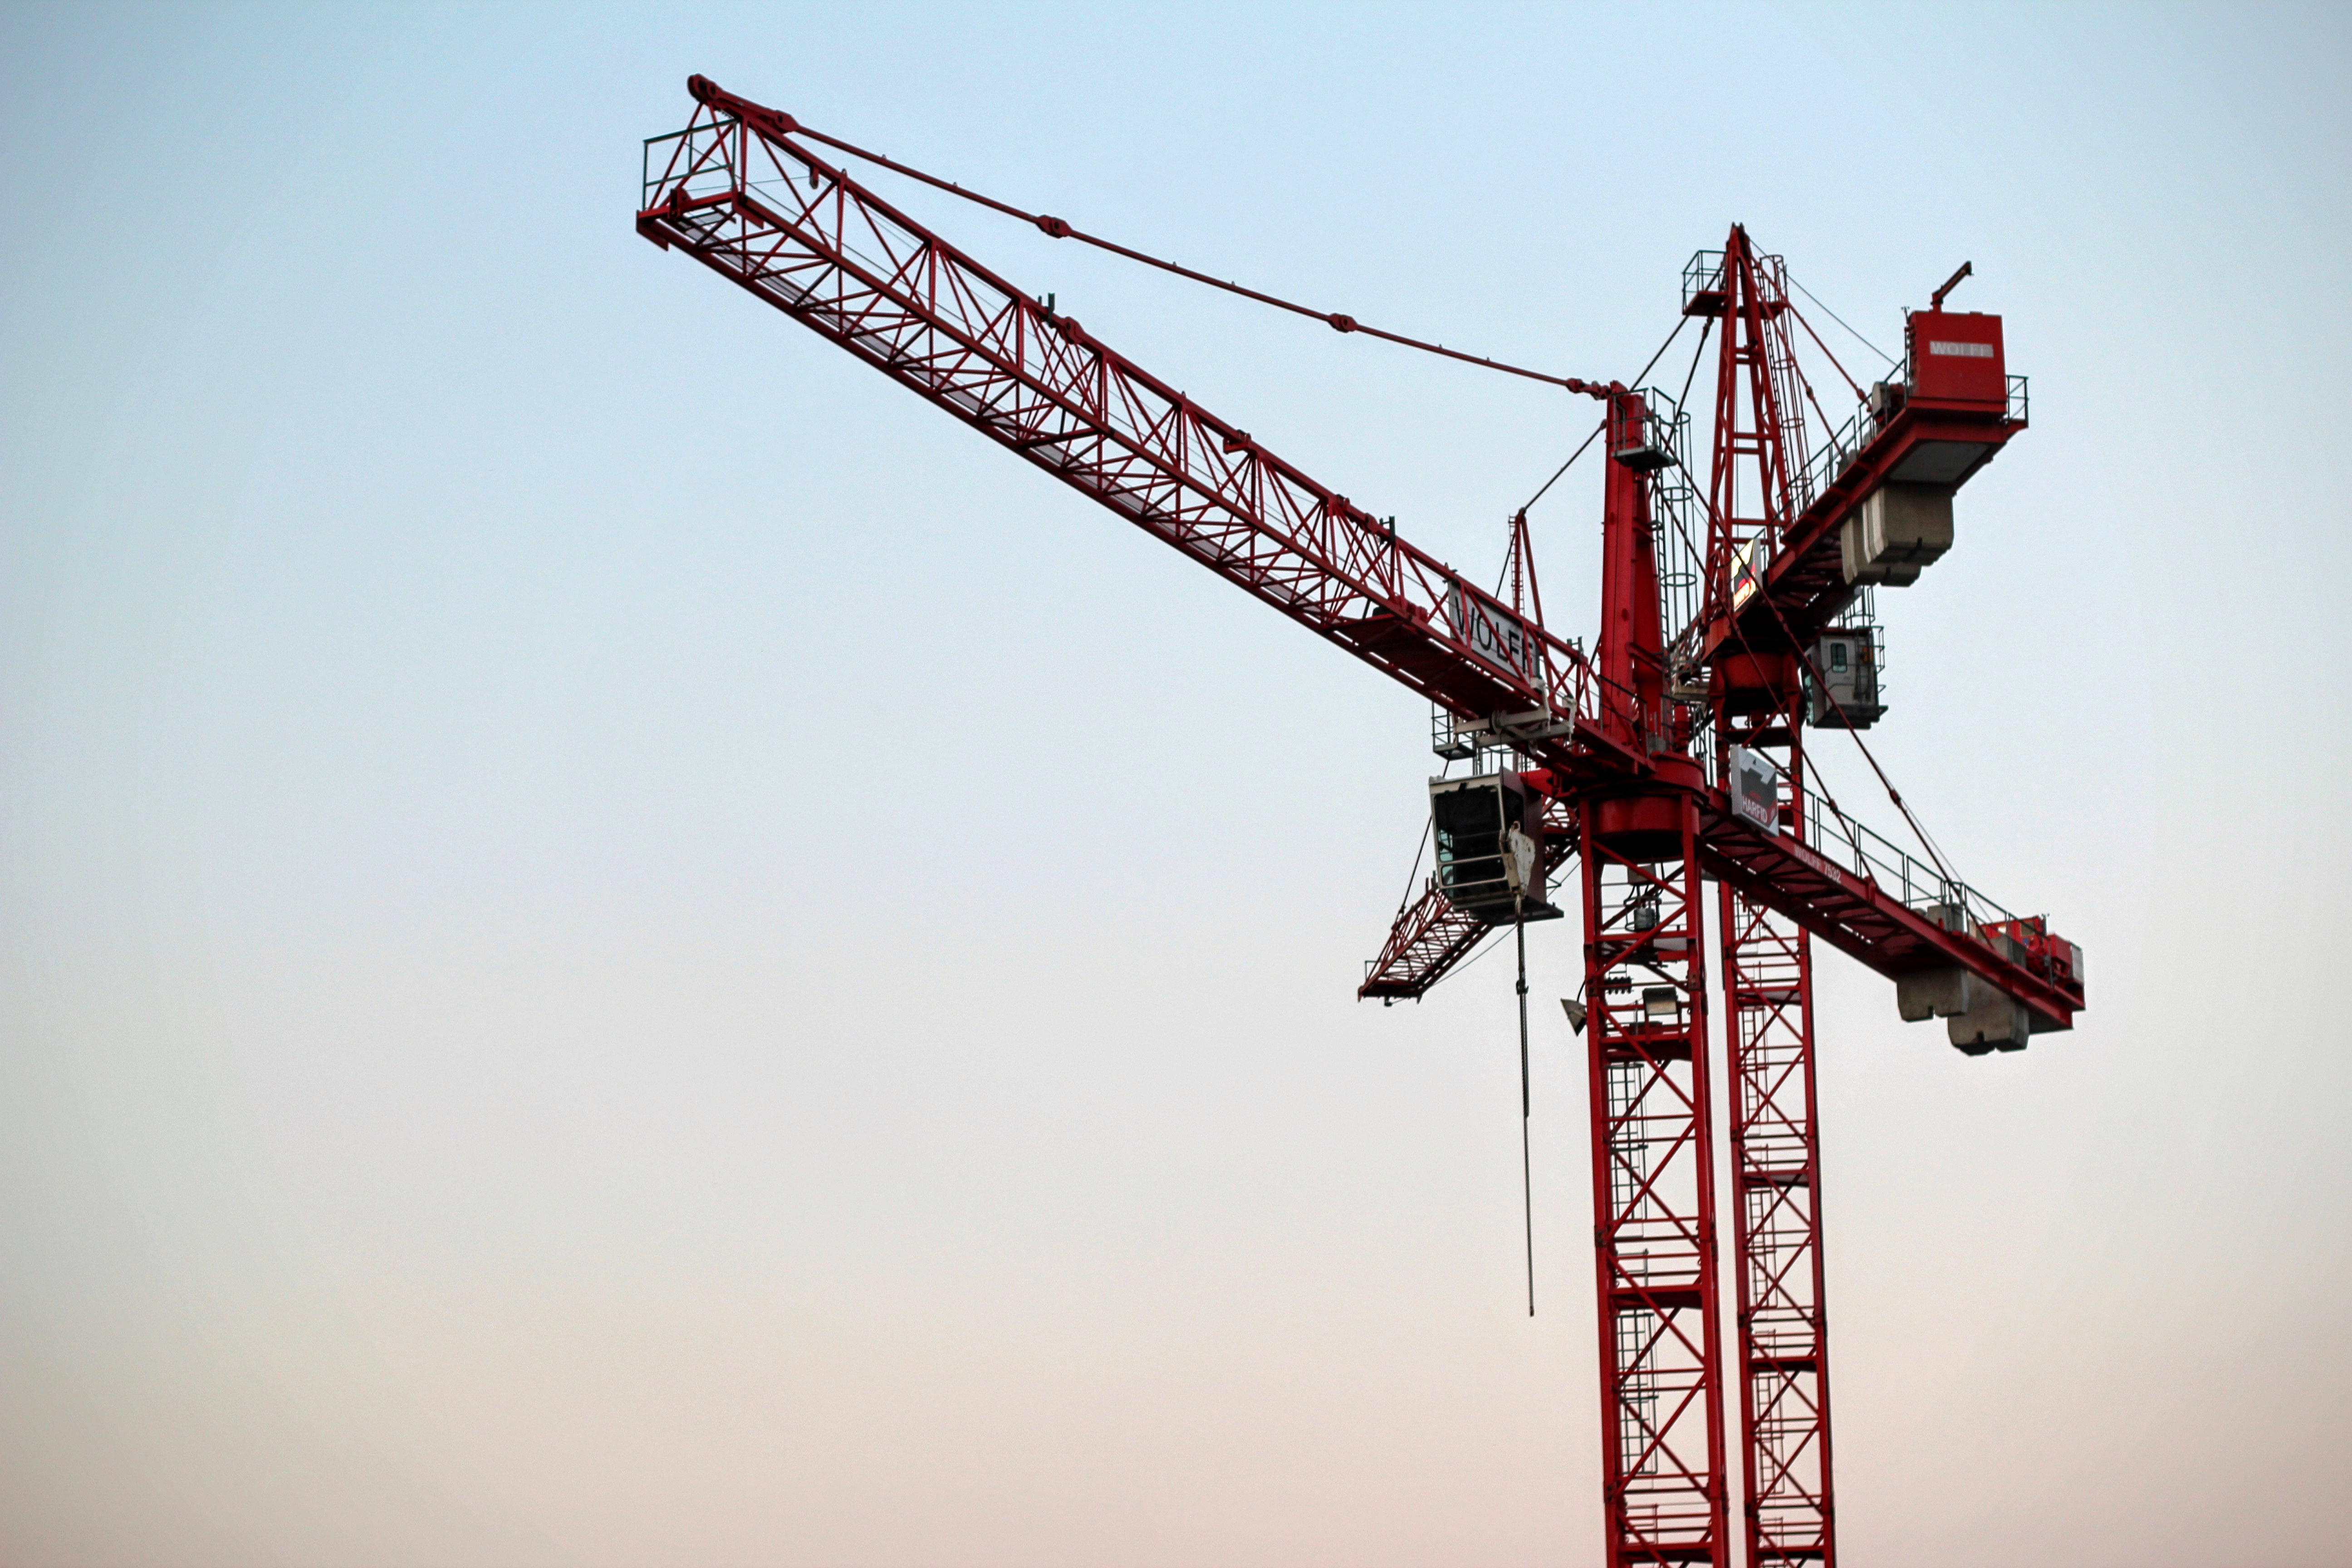 Large Red Load Crane image - Free stock photo - Public ...